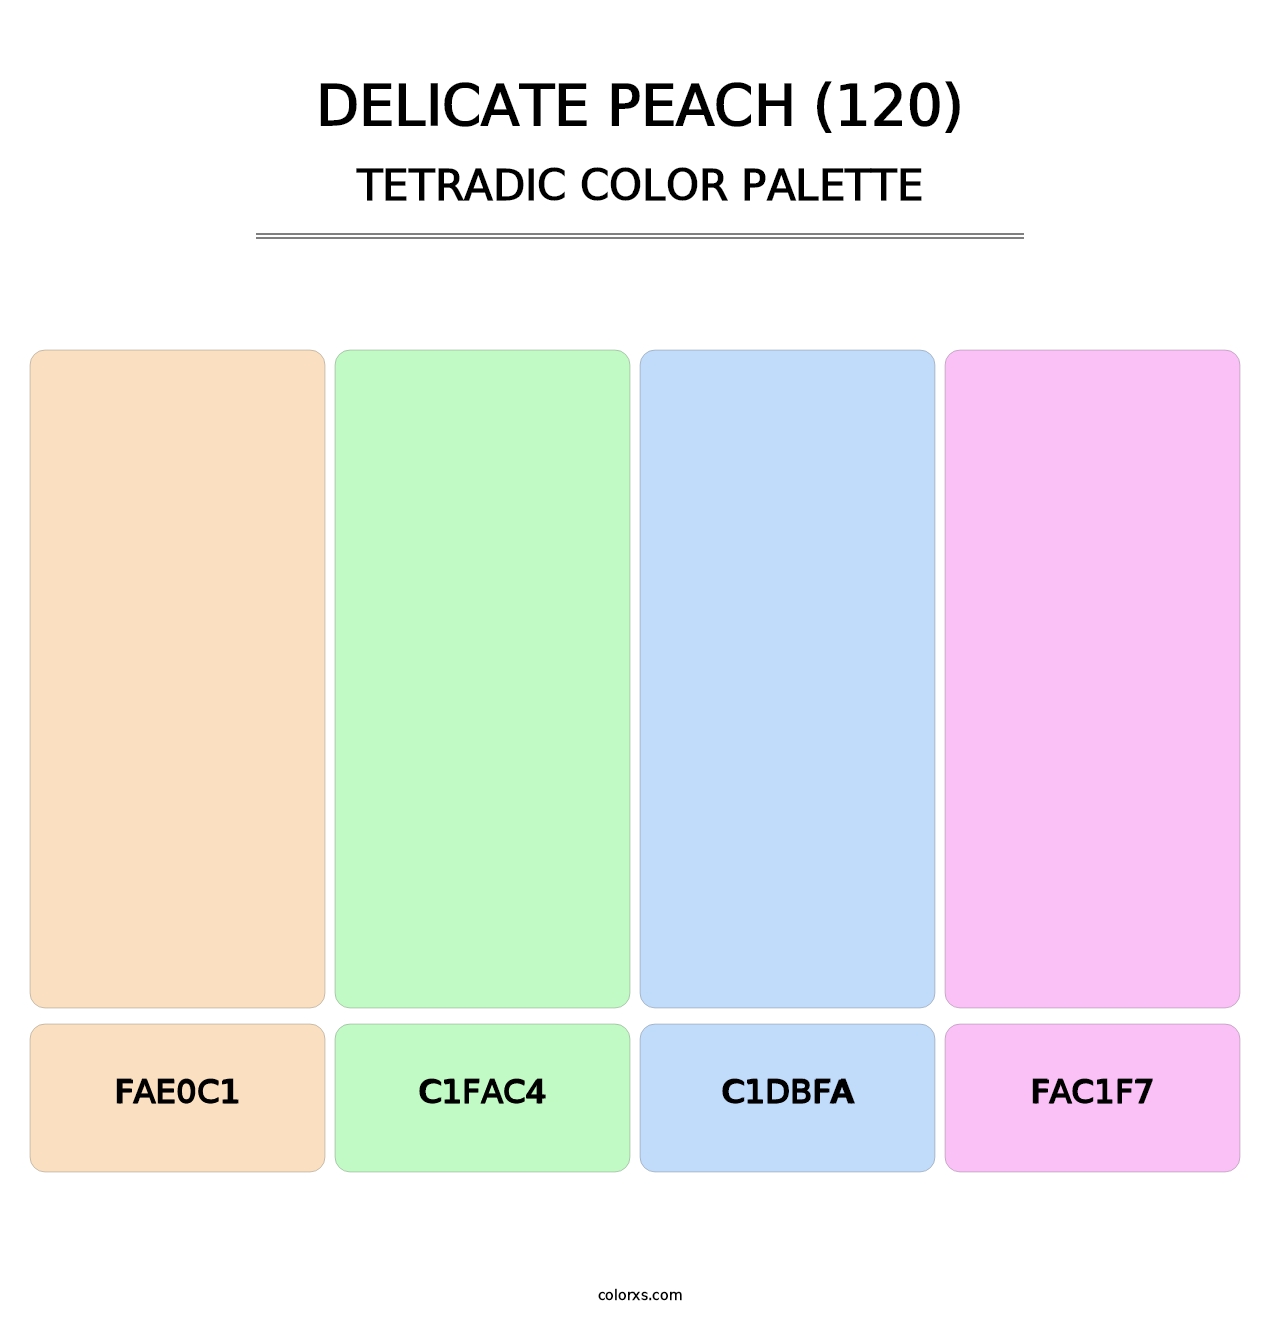 Delicate Peach (120) - Tetradic Color Palette